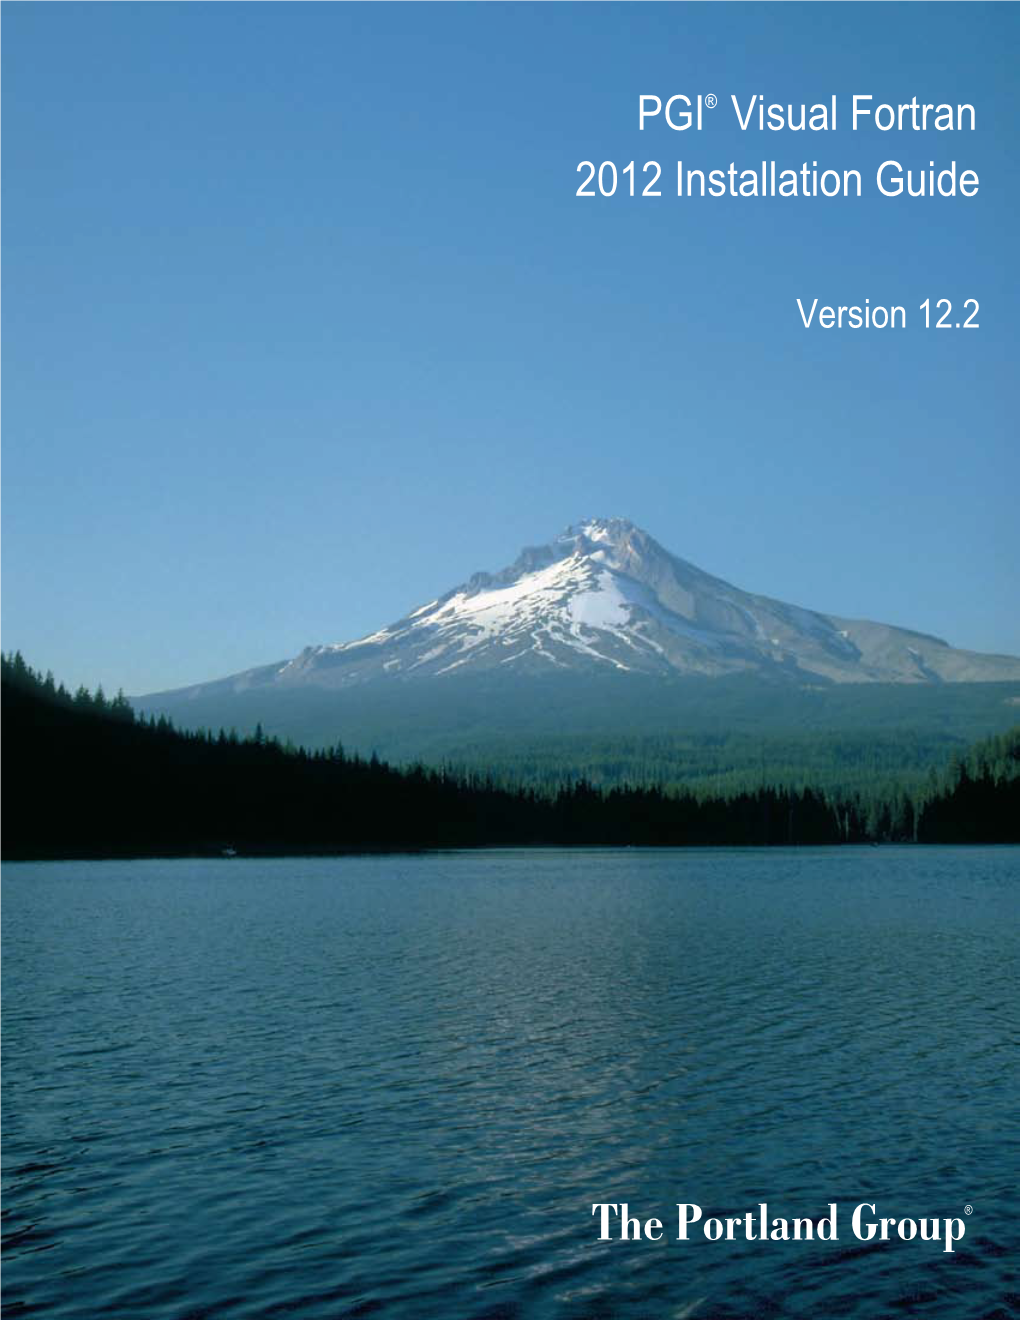 PGI Visual Fortran Installation Guide